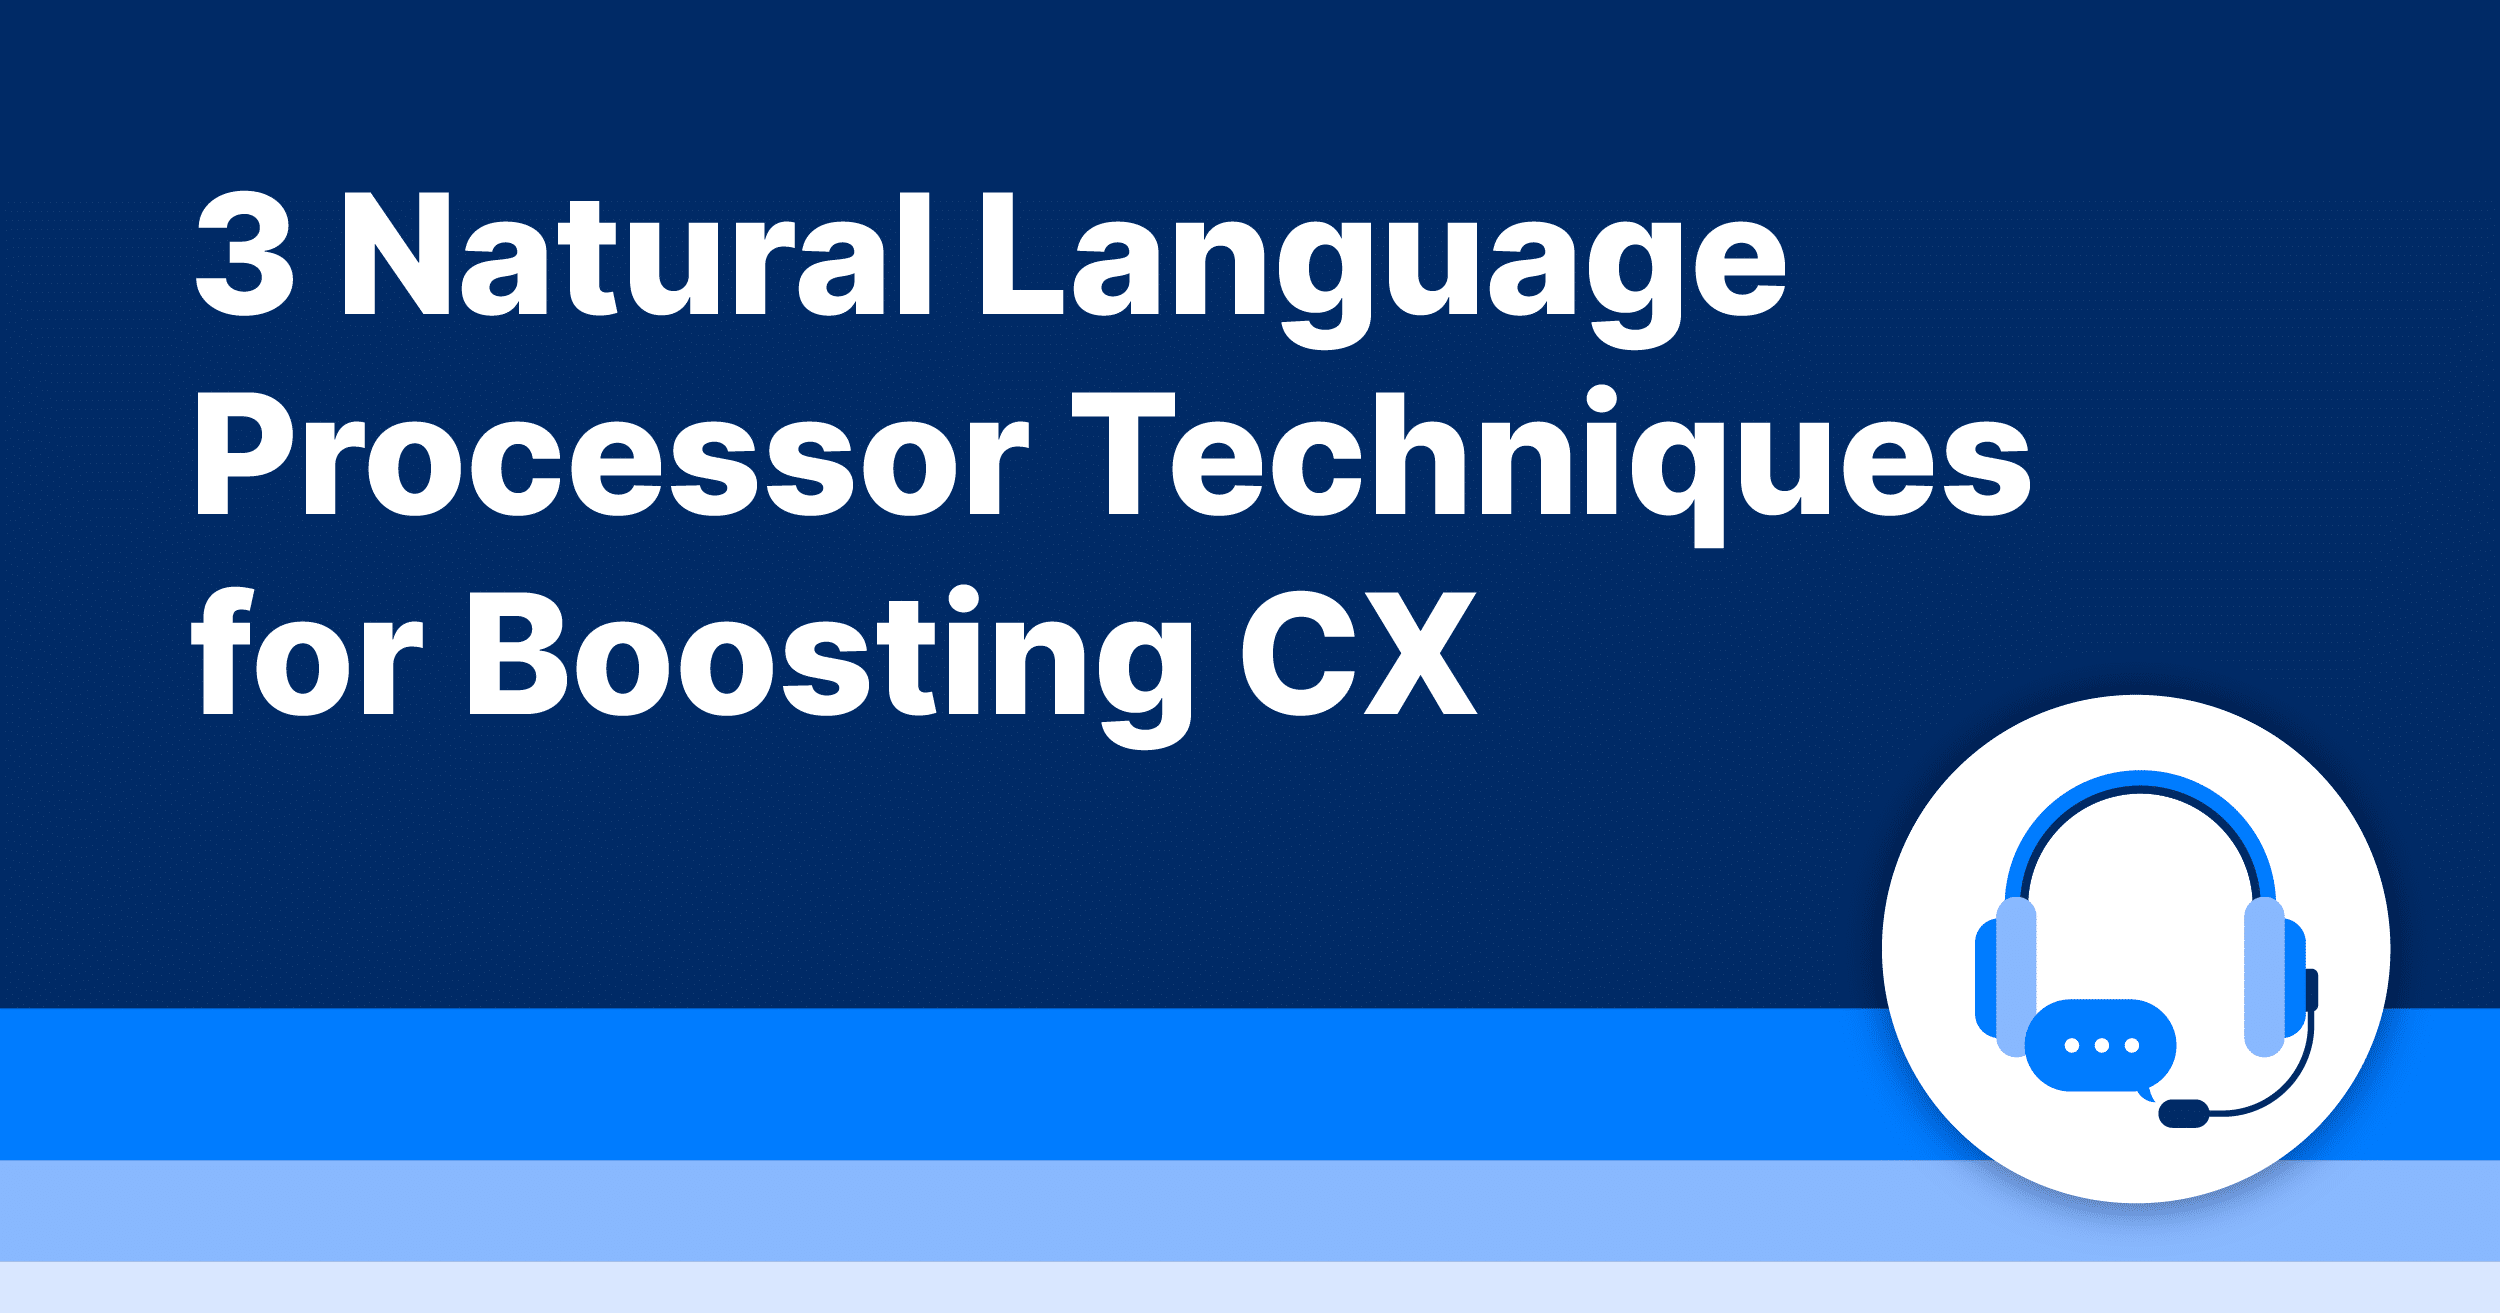 3 Natural Language Processor Techniques for Boosting CX